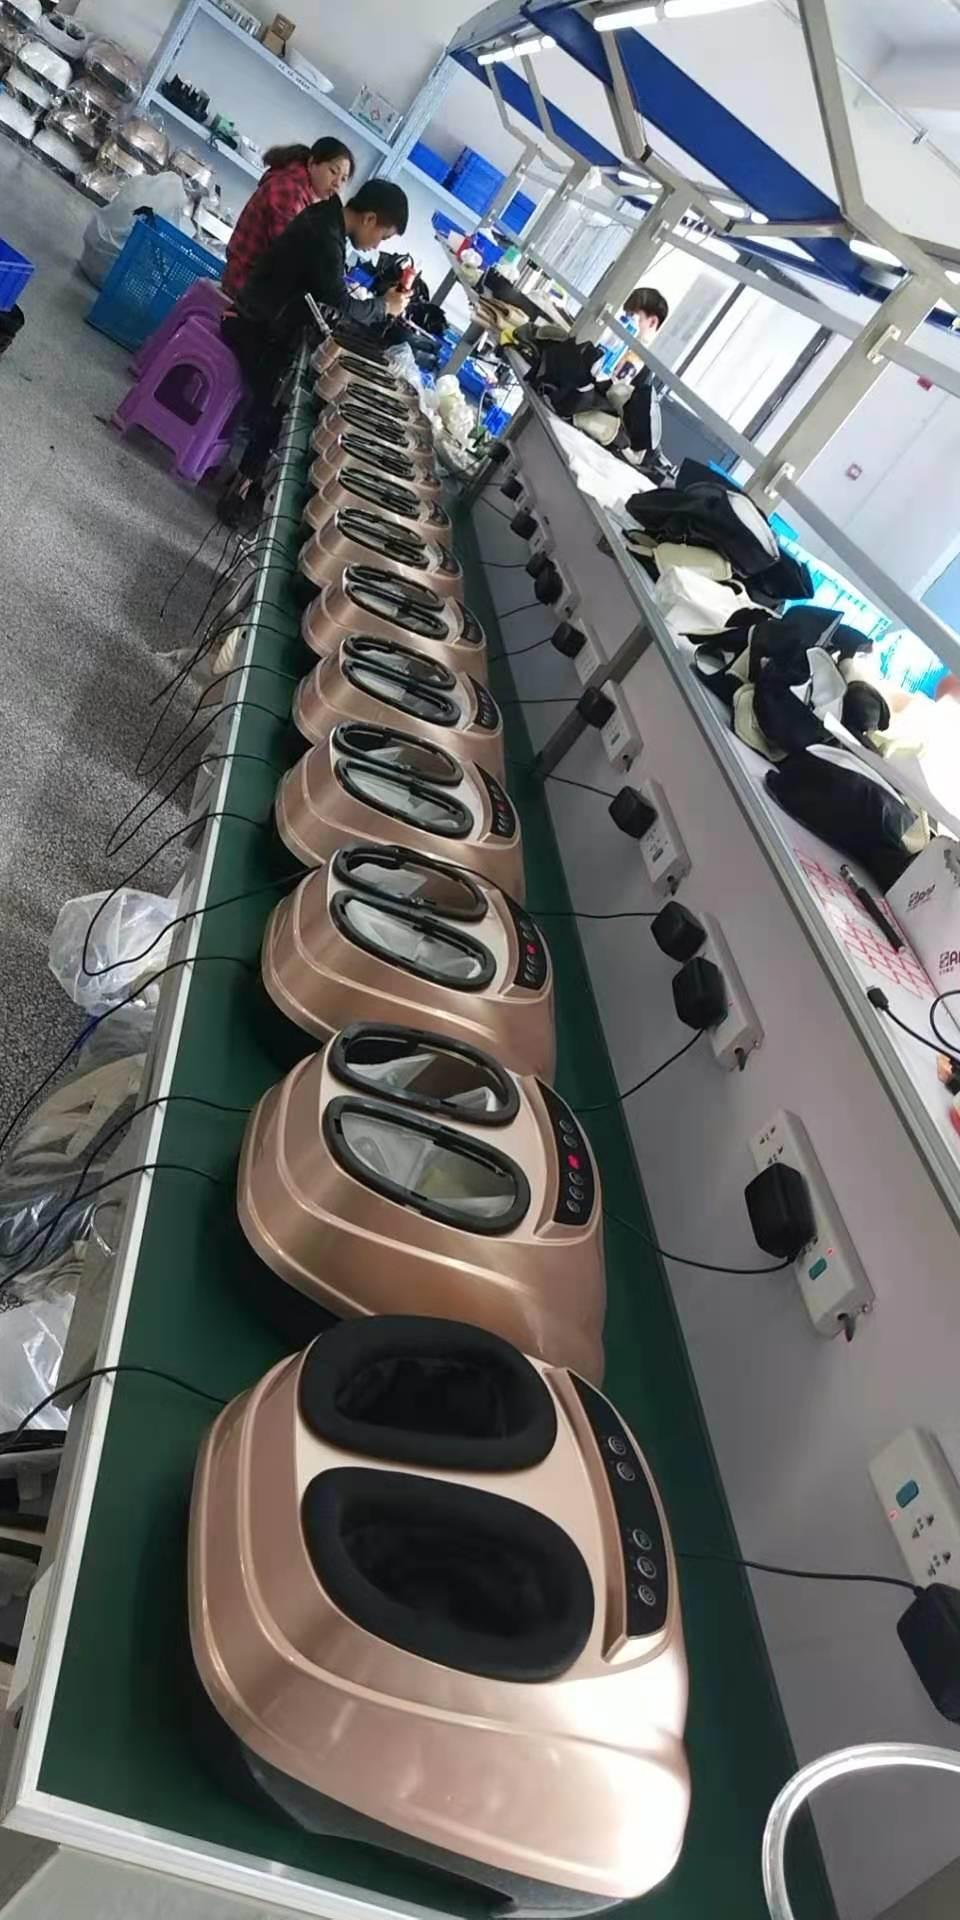 China Air Pressure Tahath Carton 16.8 X 15.3 9.8 Inches; 10.65 Pounds Foot Massage Machine